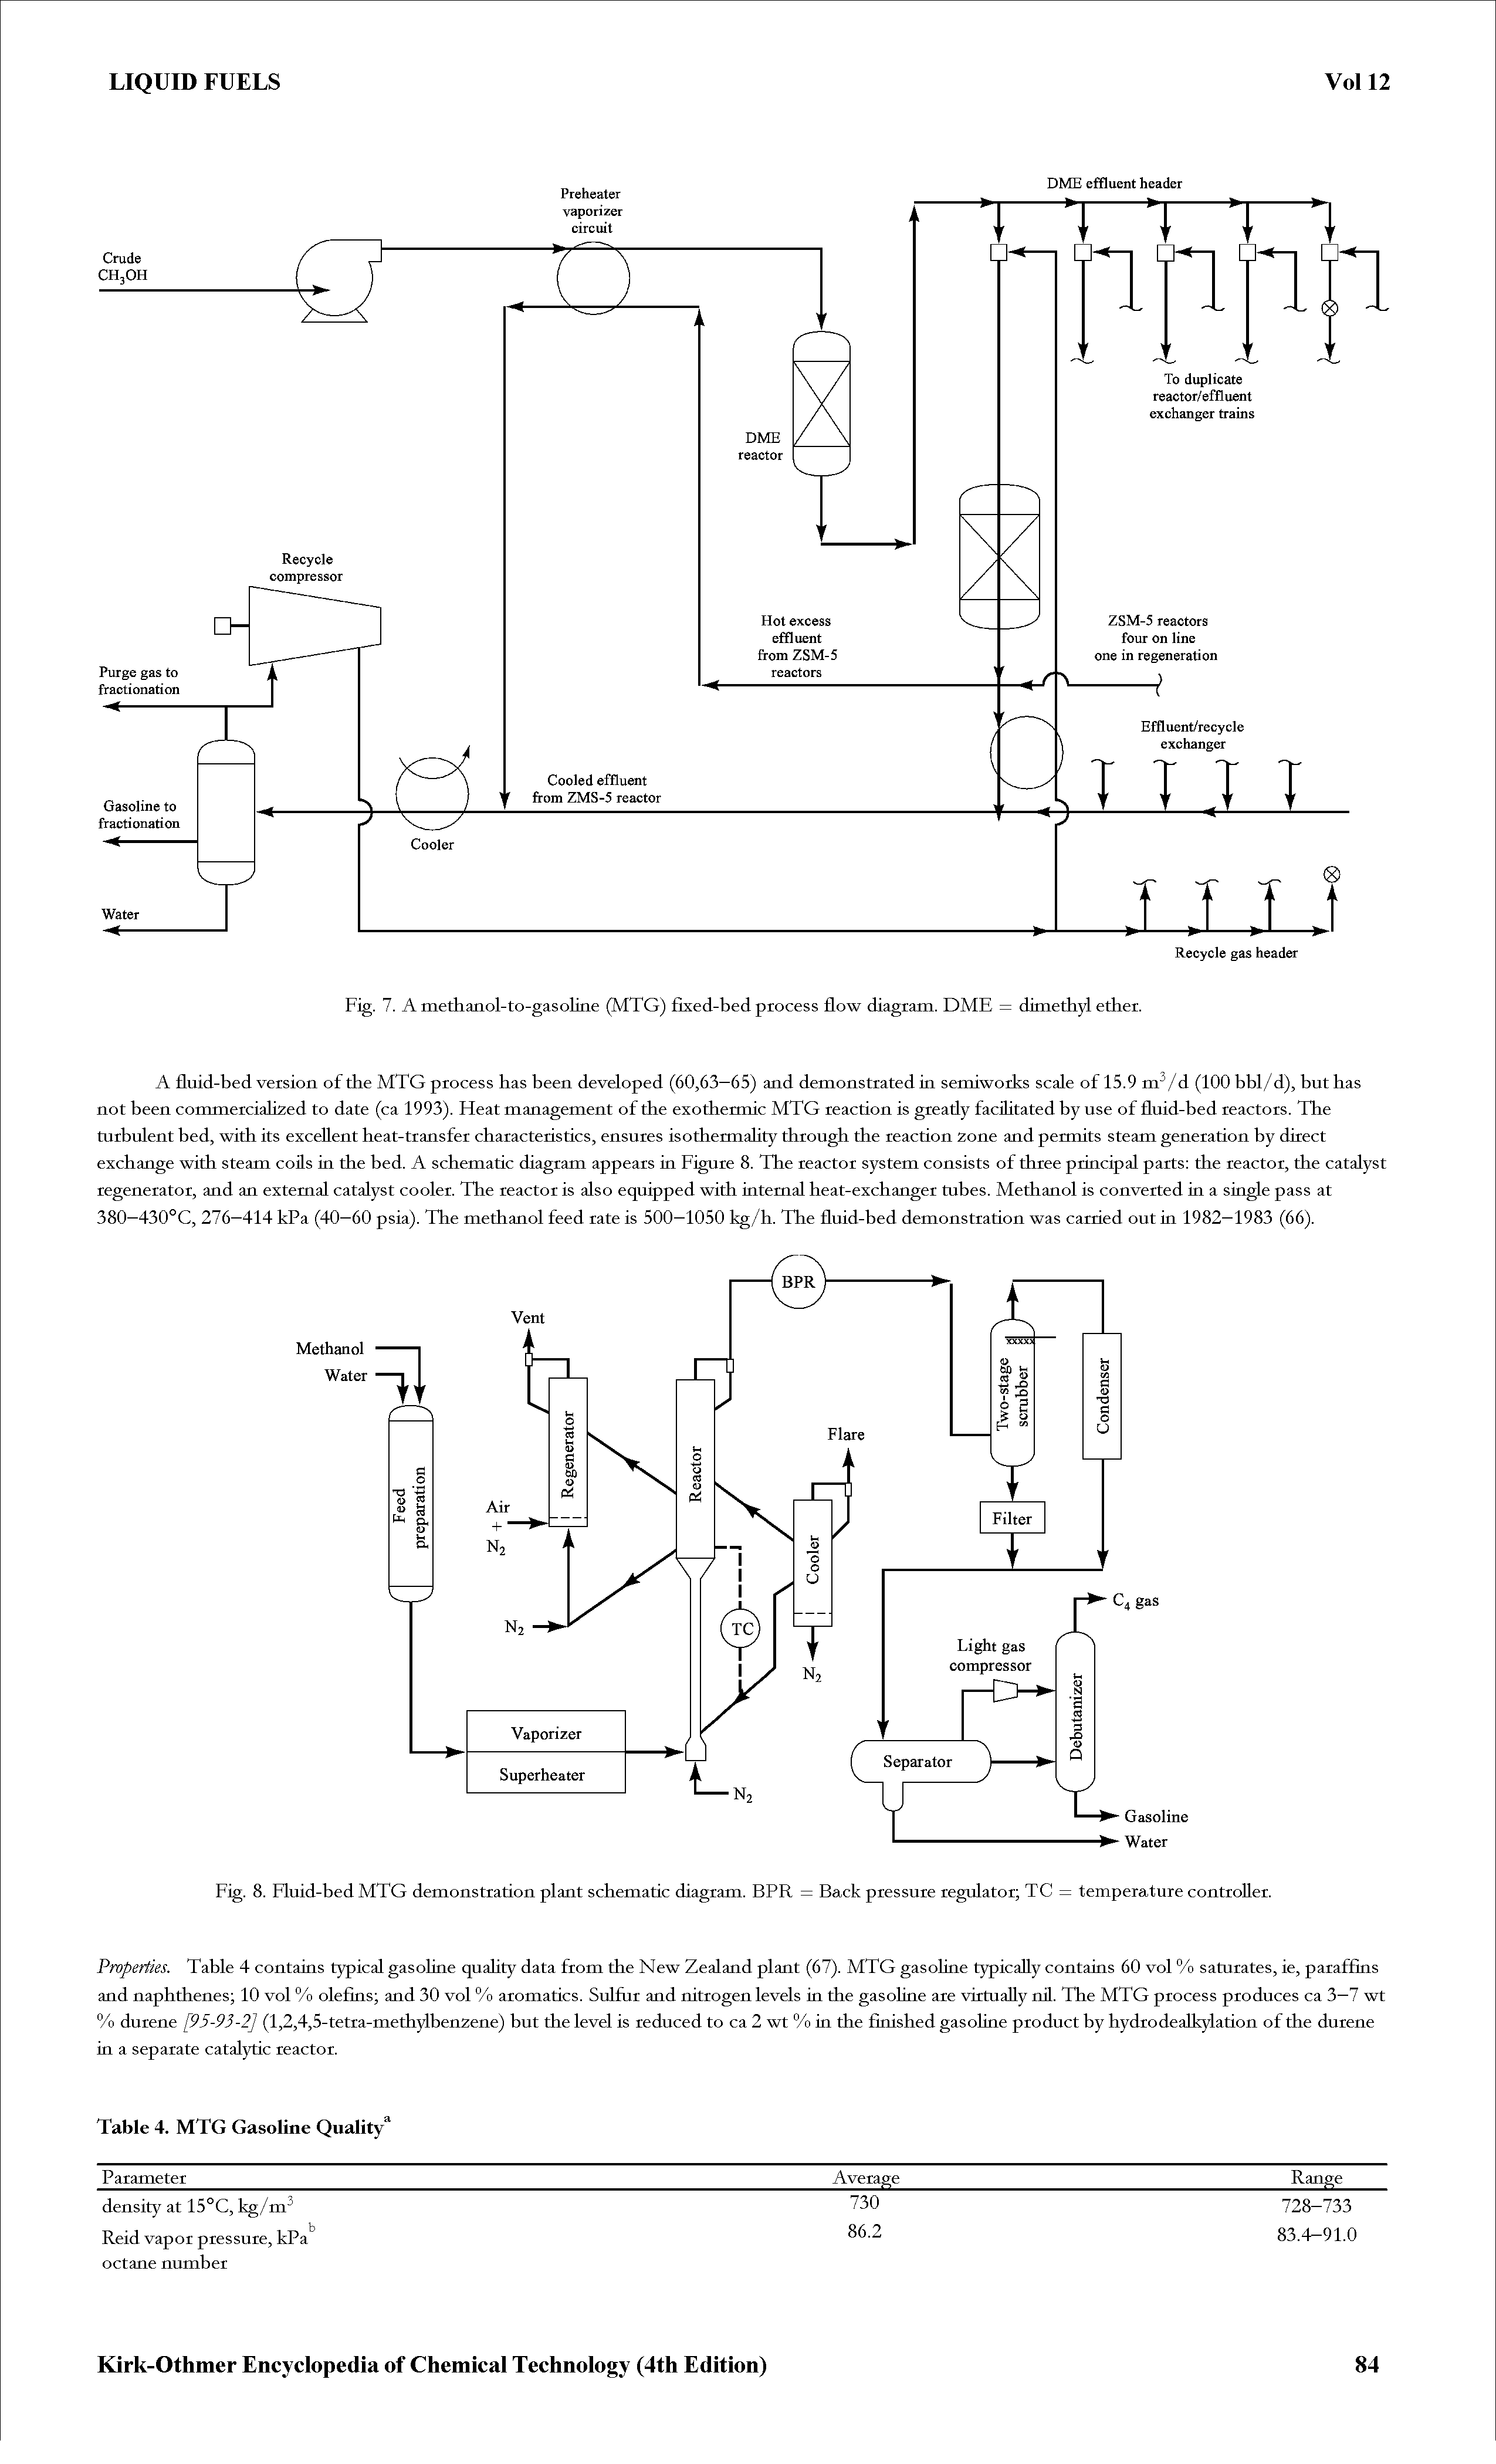 Fig. 8. Fluid-bed MTG demonstration plant schematic diagram. BPR = Back pressure regulator TC = temperature controller.